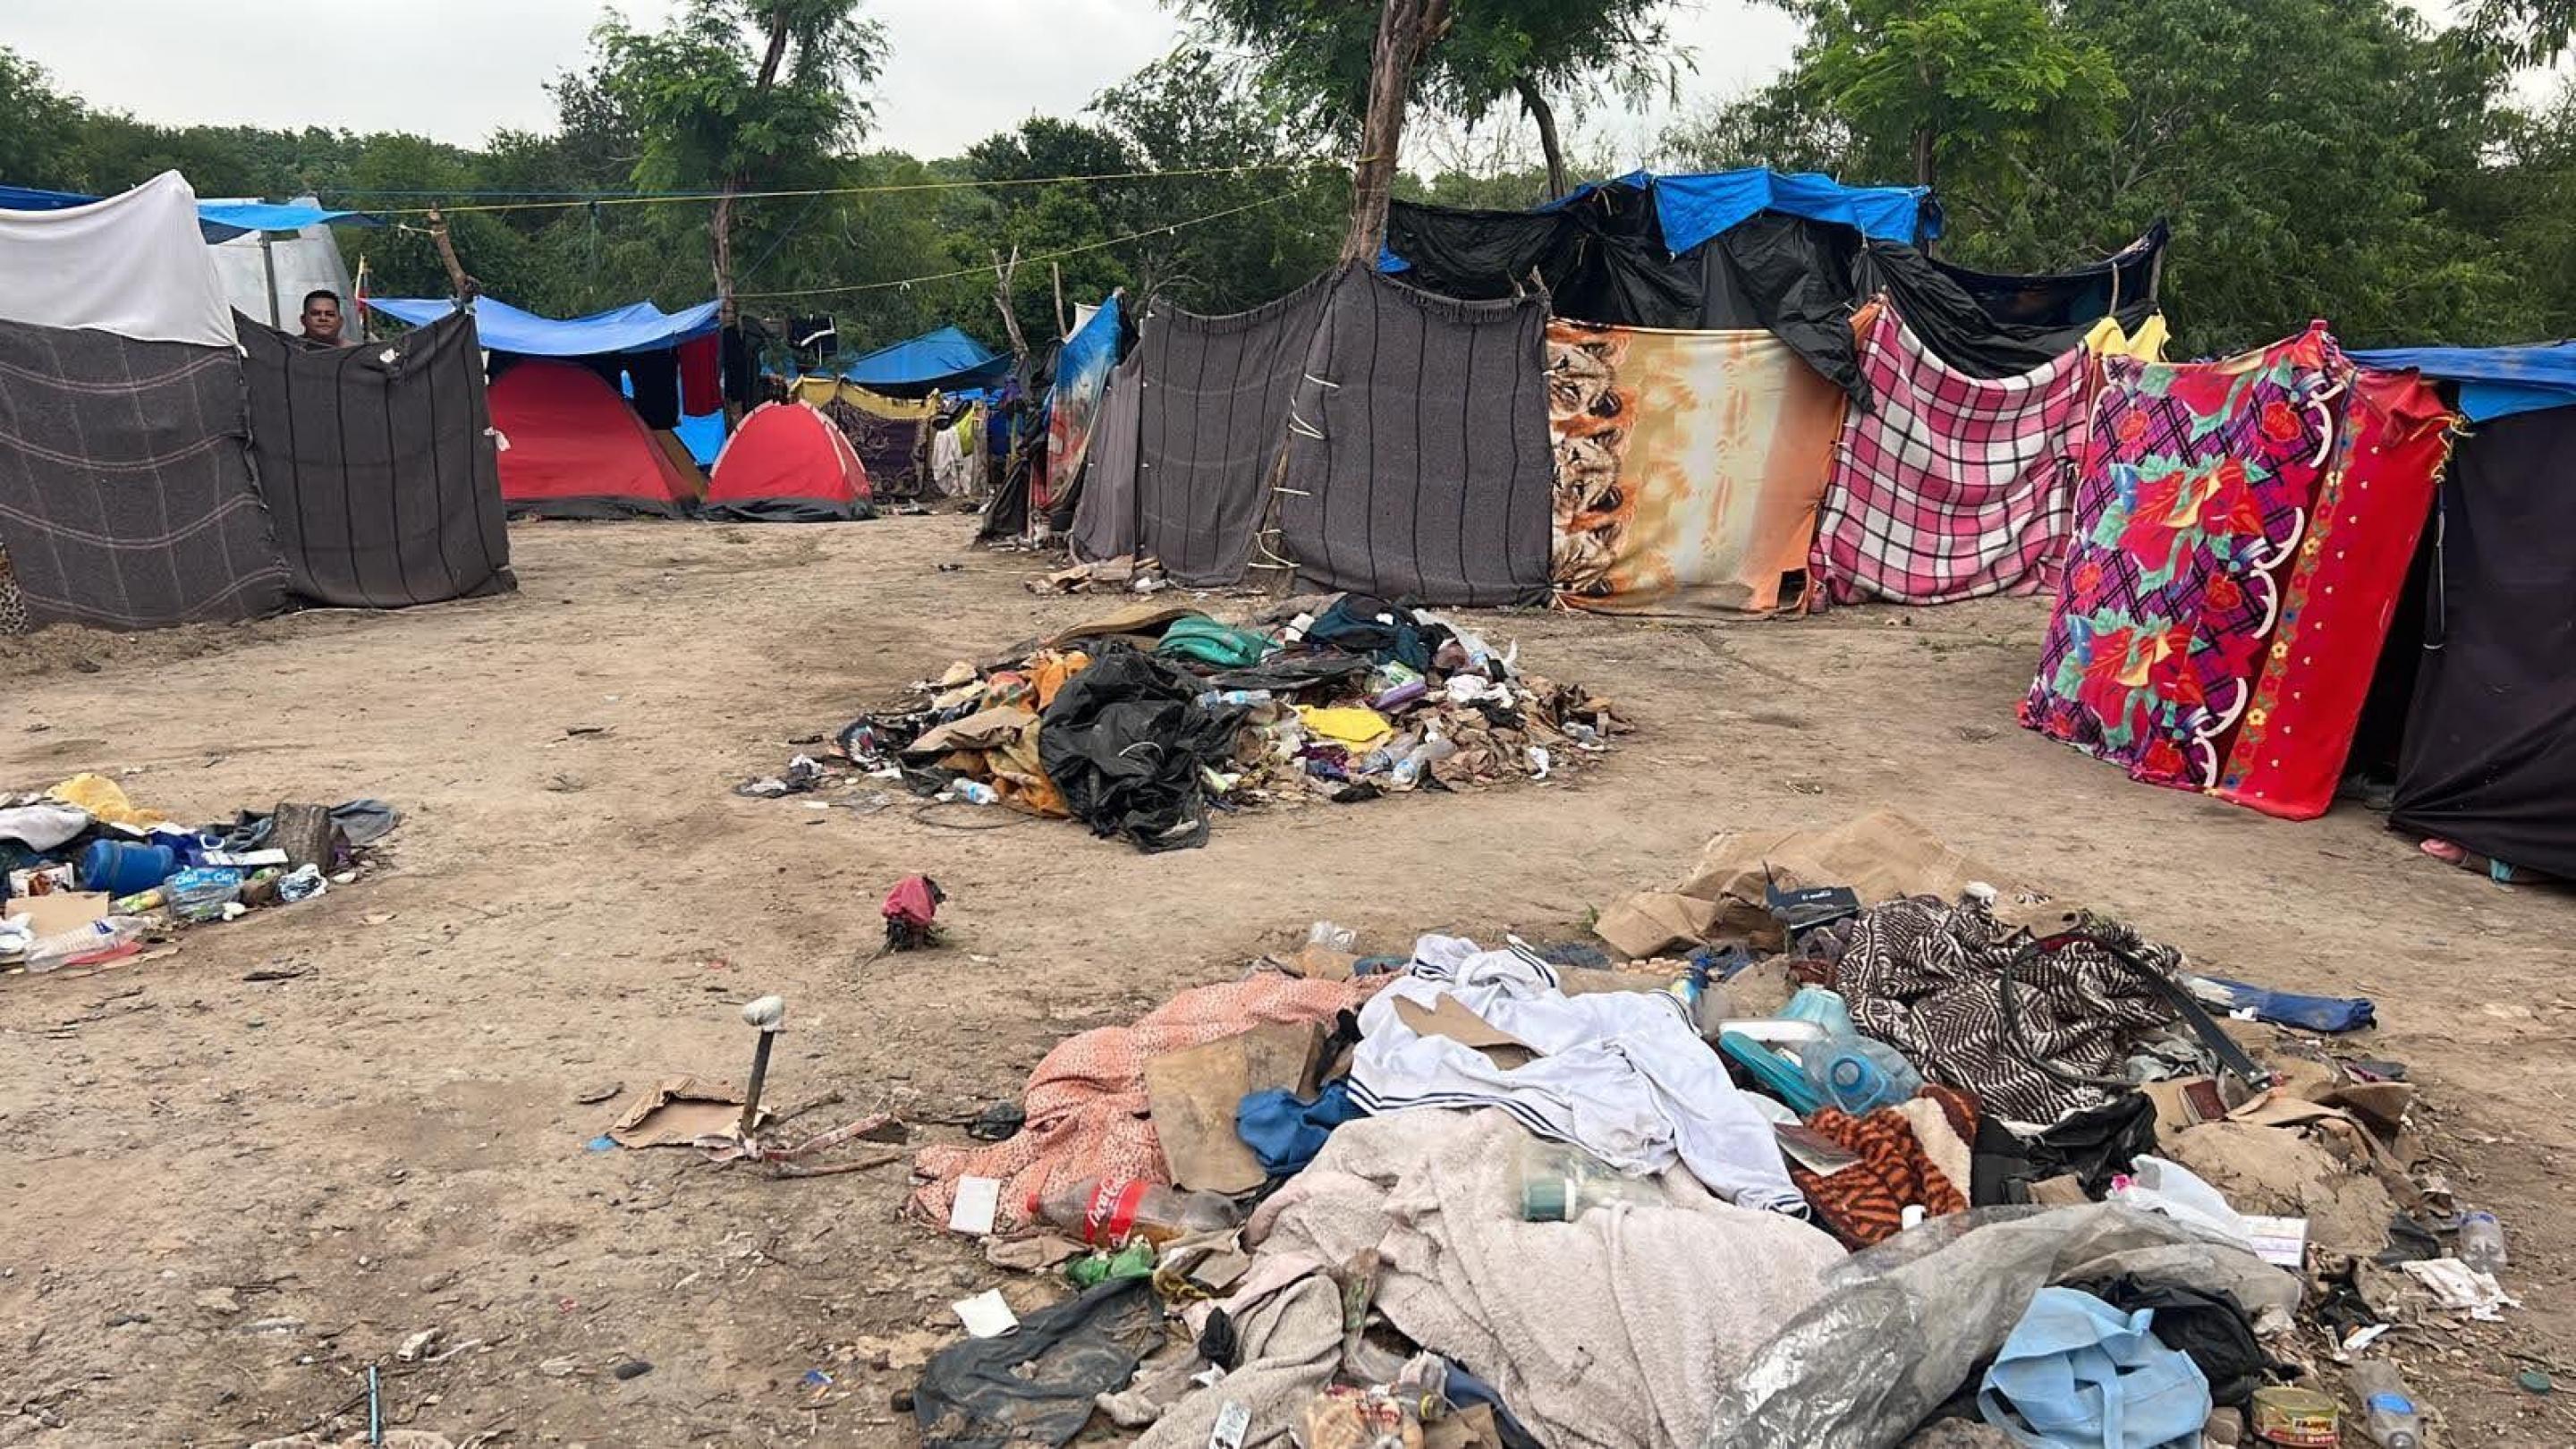 migrant encampment in Mexico